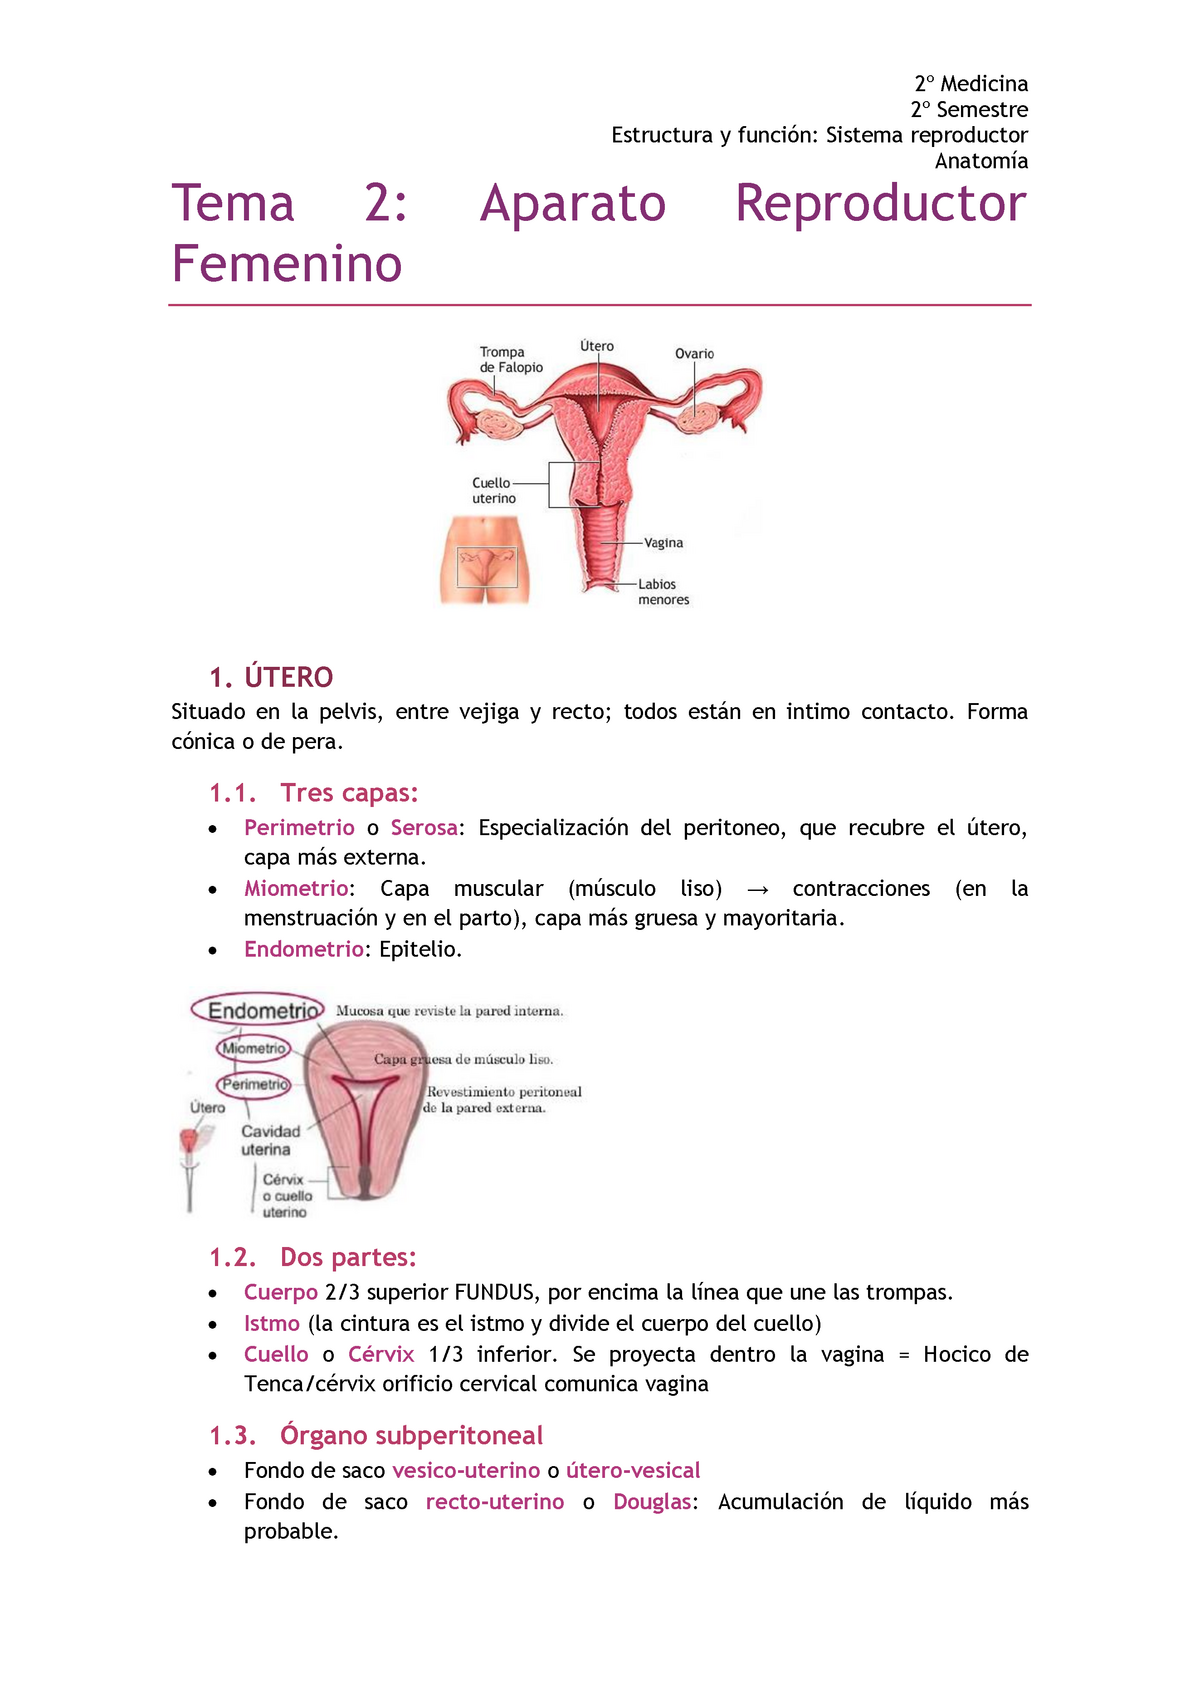 2 Aparato Reproductor Femenino Tema 2 Femenino Medicina Semestre